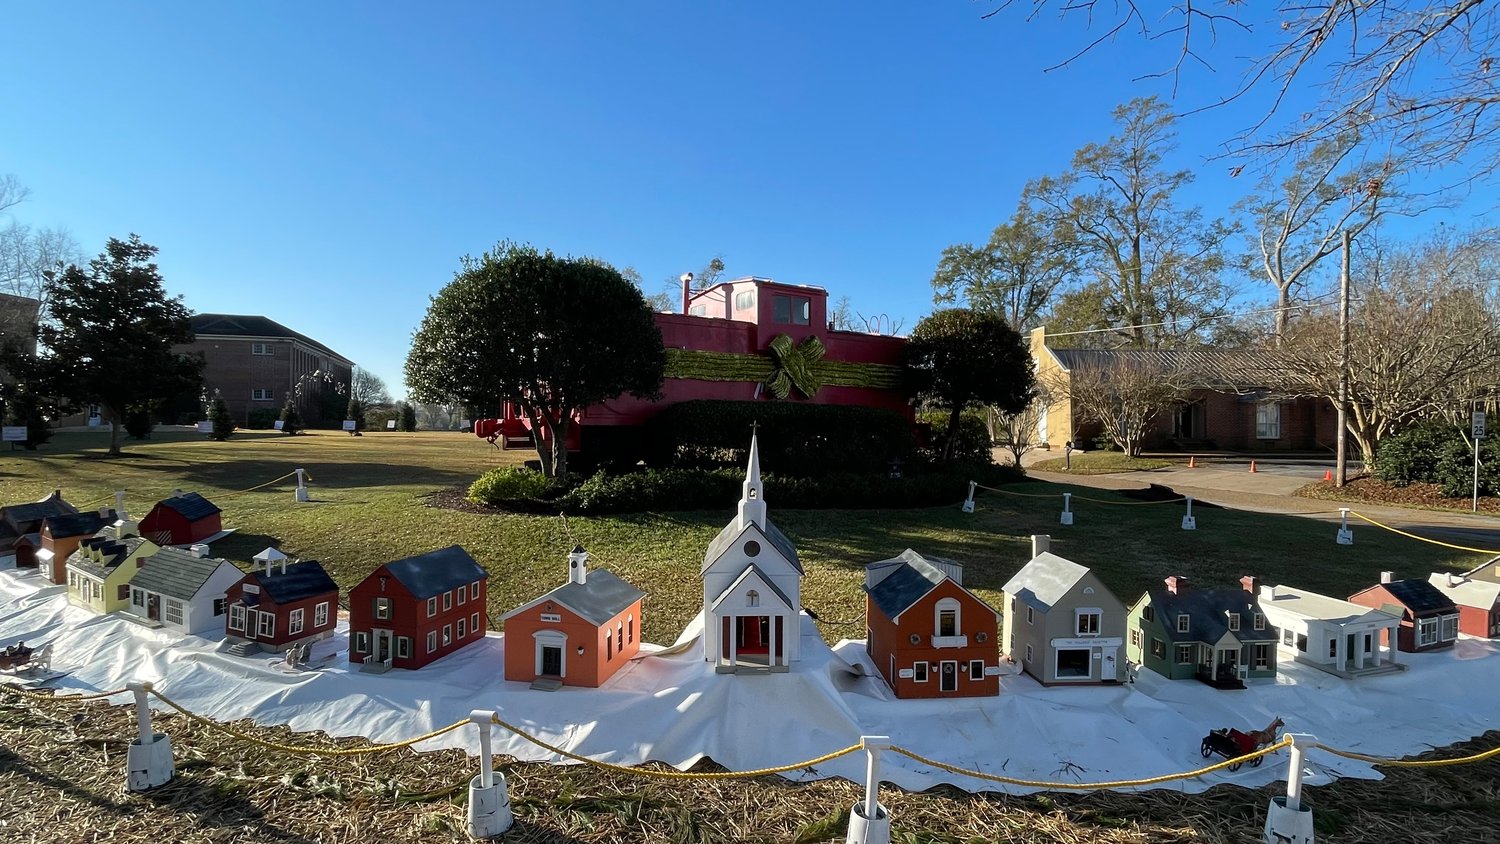 Madison Christmas Village on display